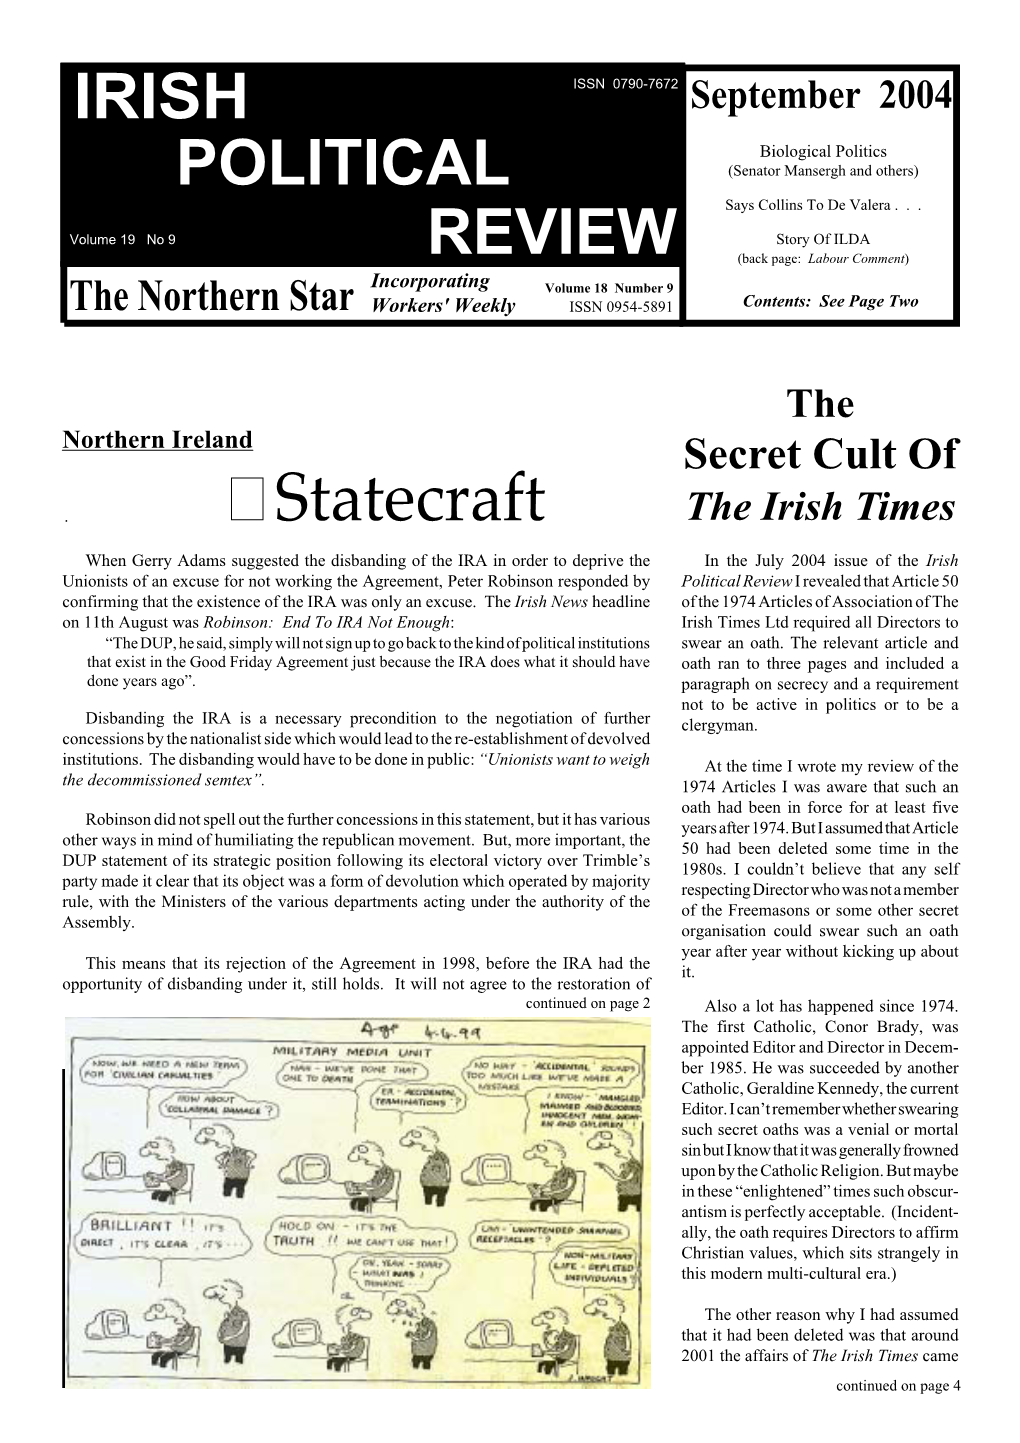 Irish Political Review, September 2004